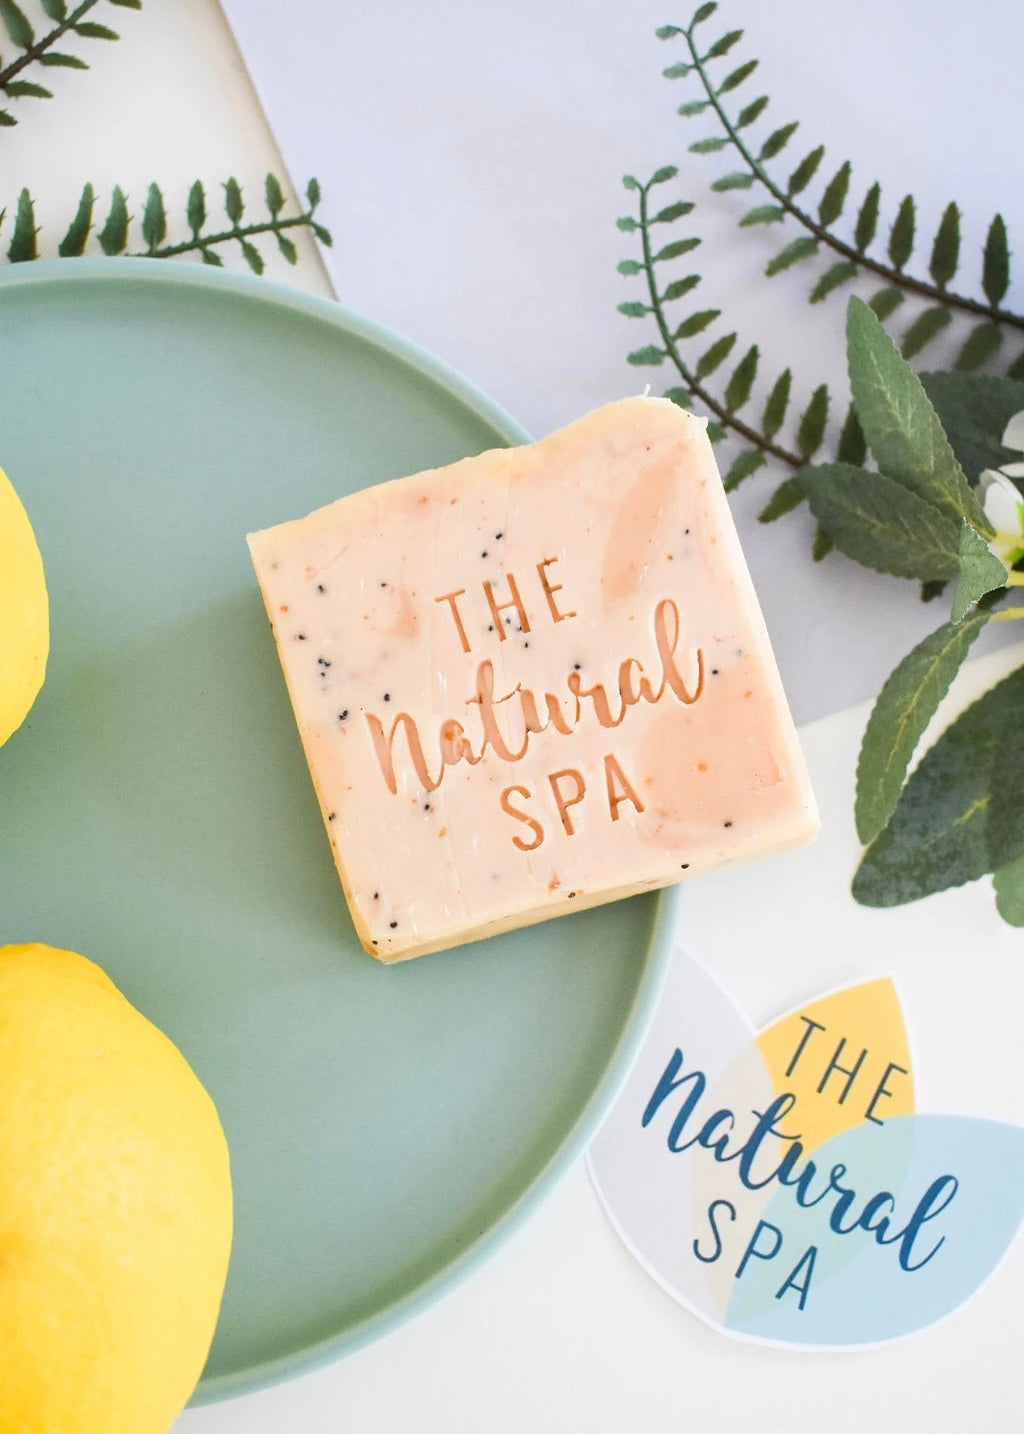 The Natural Spa - Cold Process Soap - Large - Lemon Sorbet